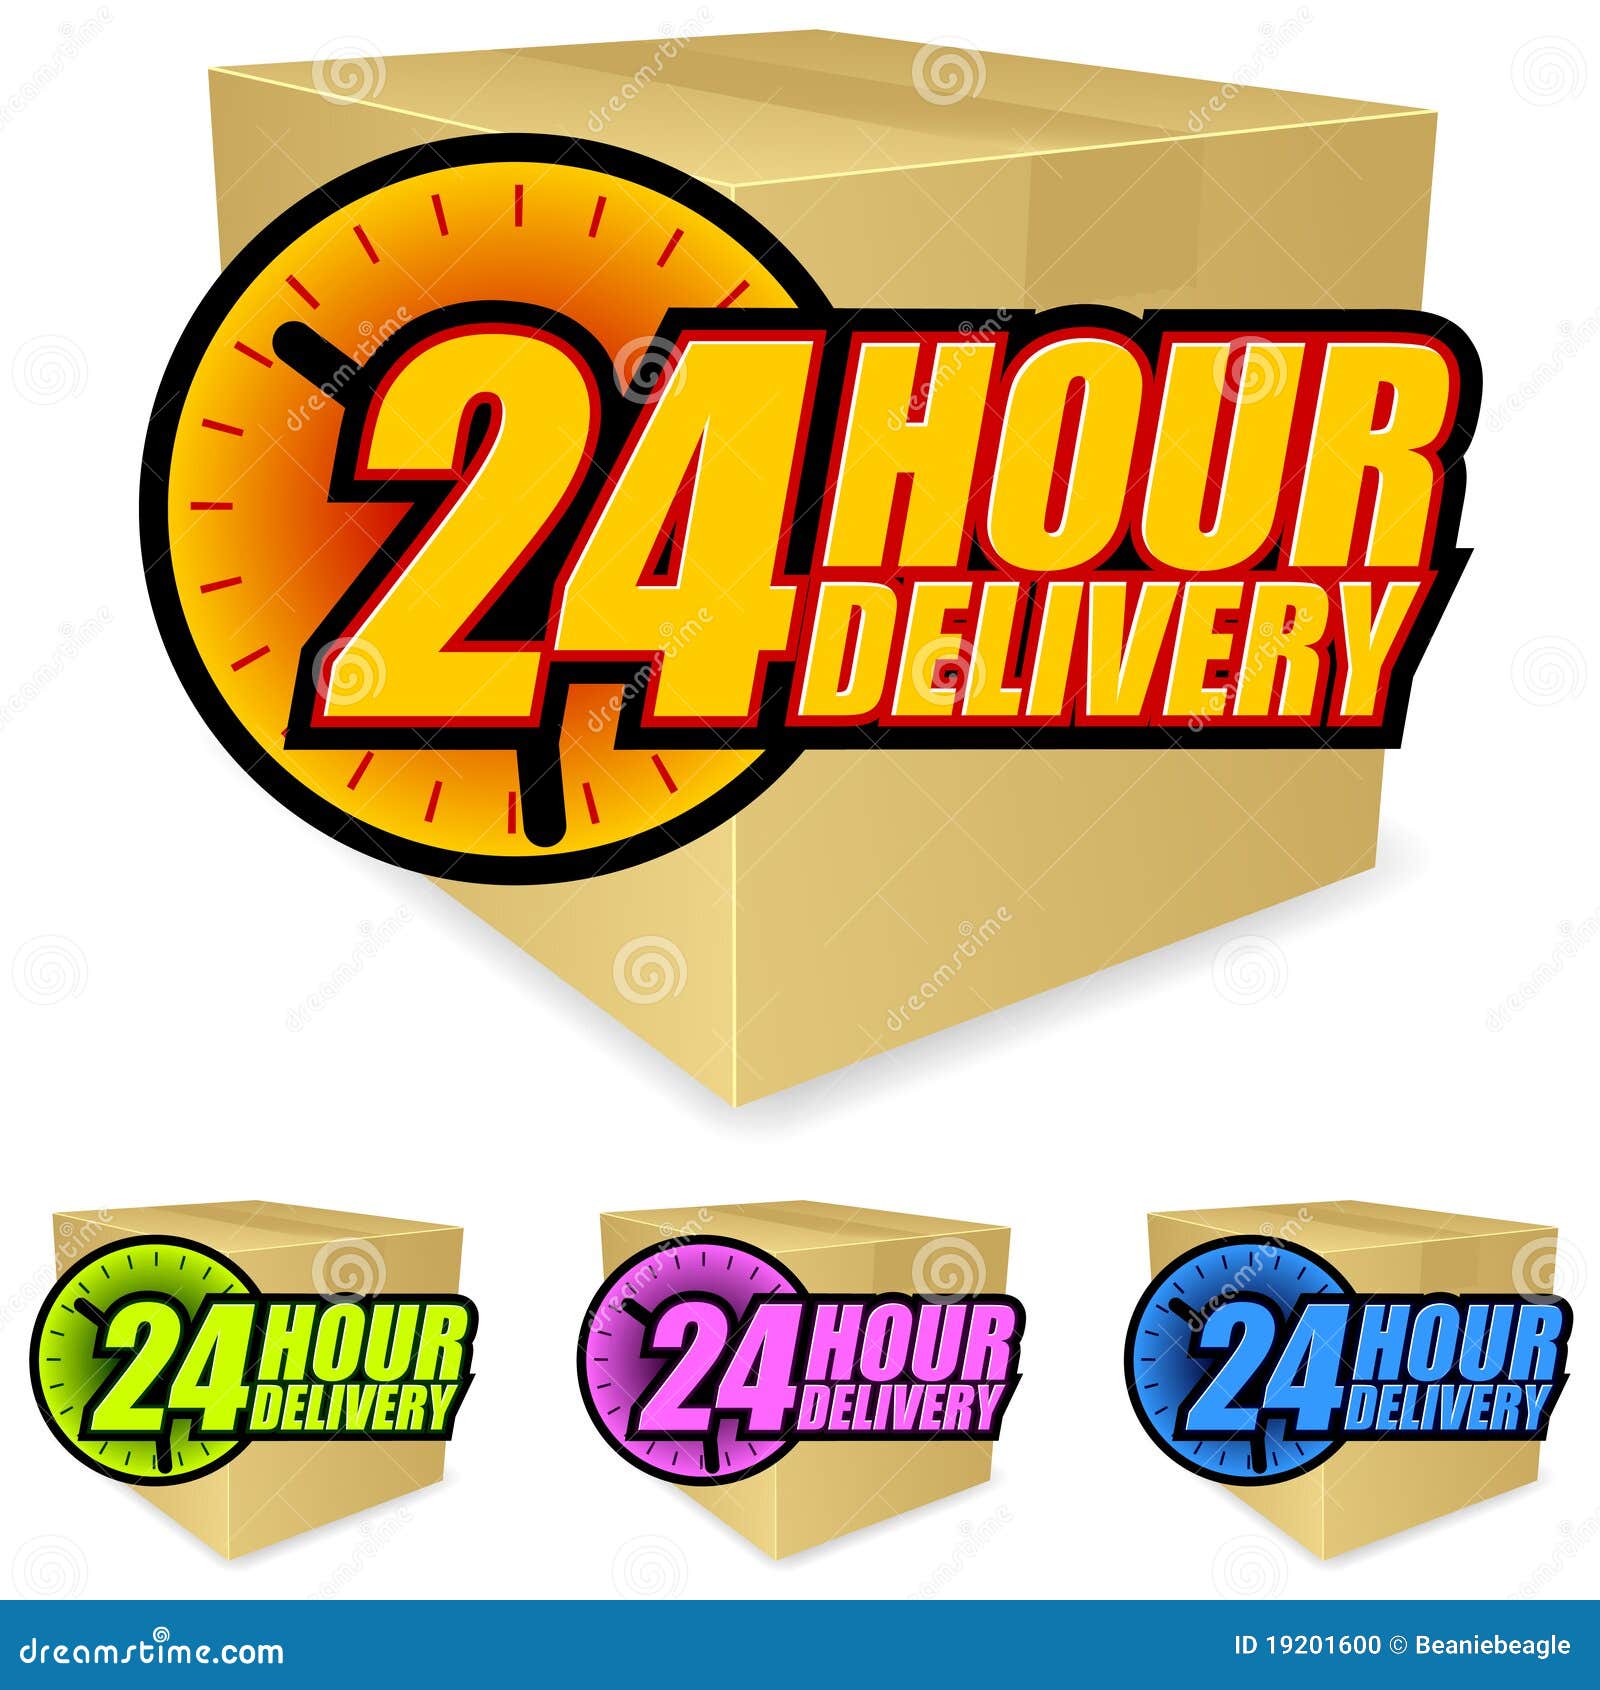 24 hour delivery phoenix